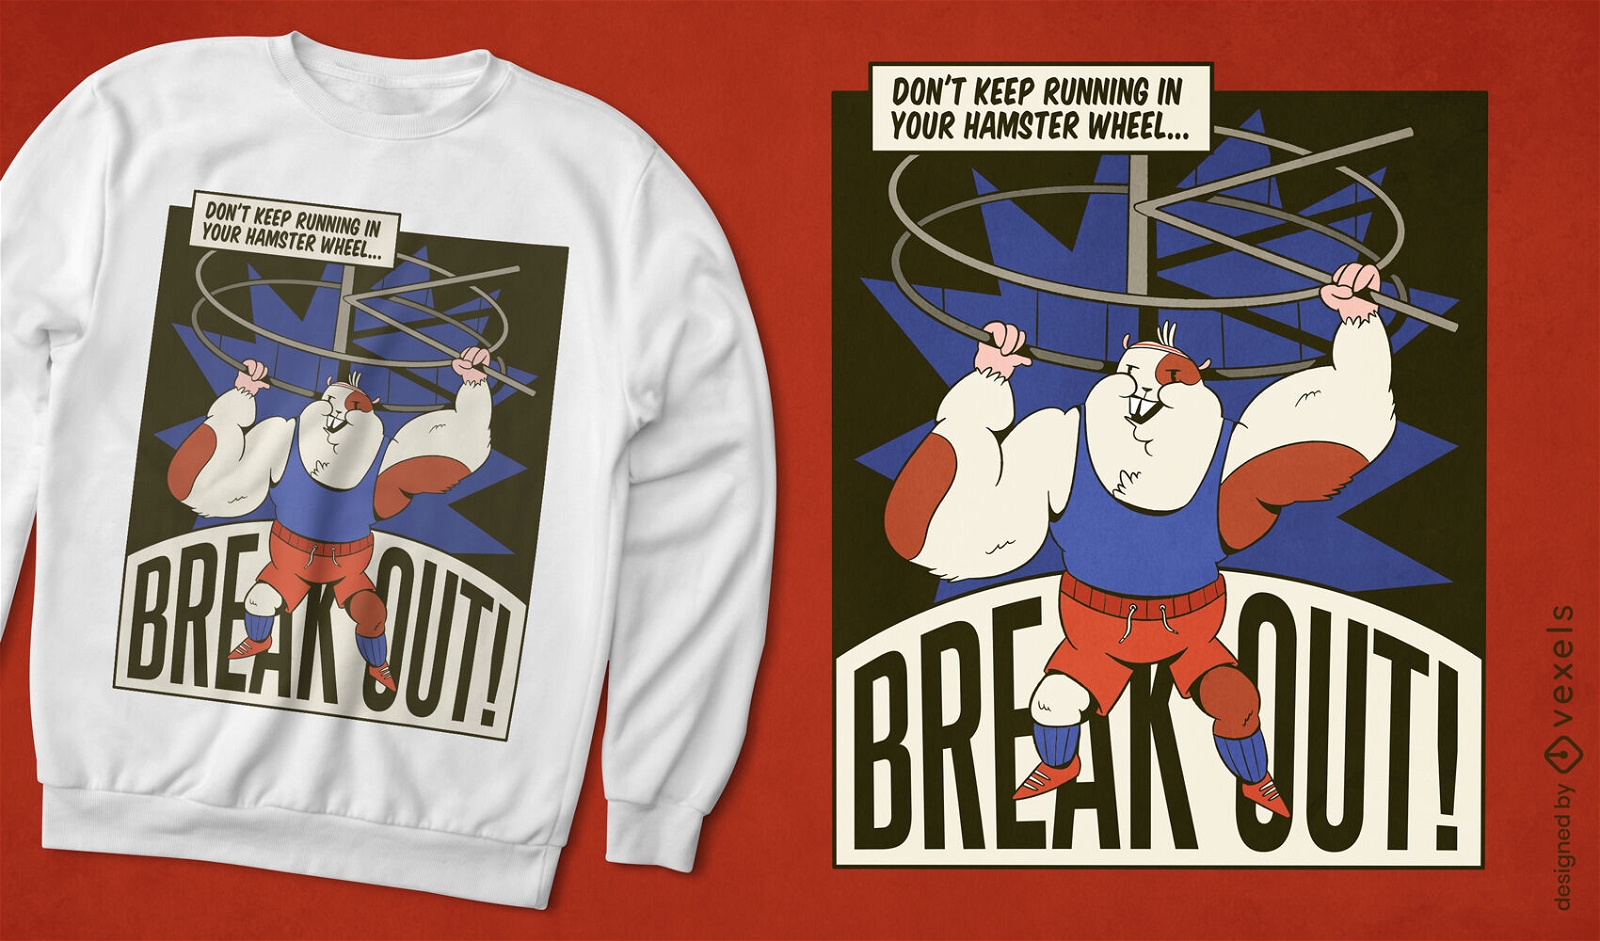 Break out comic hamster t-shirt design